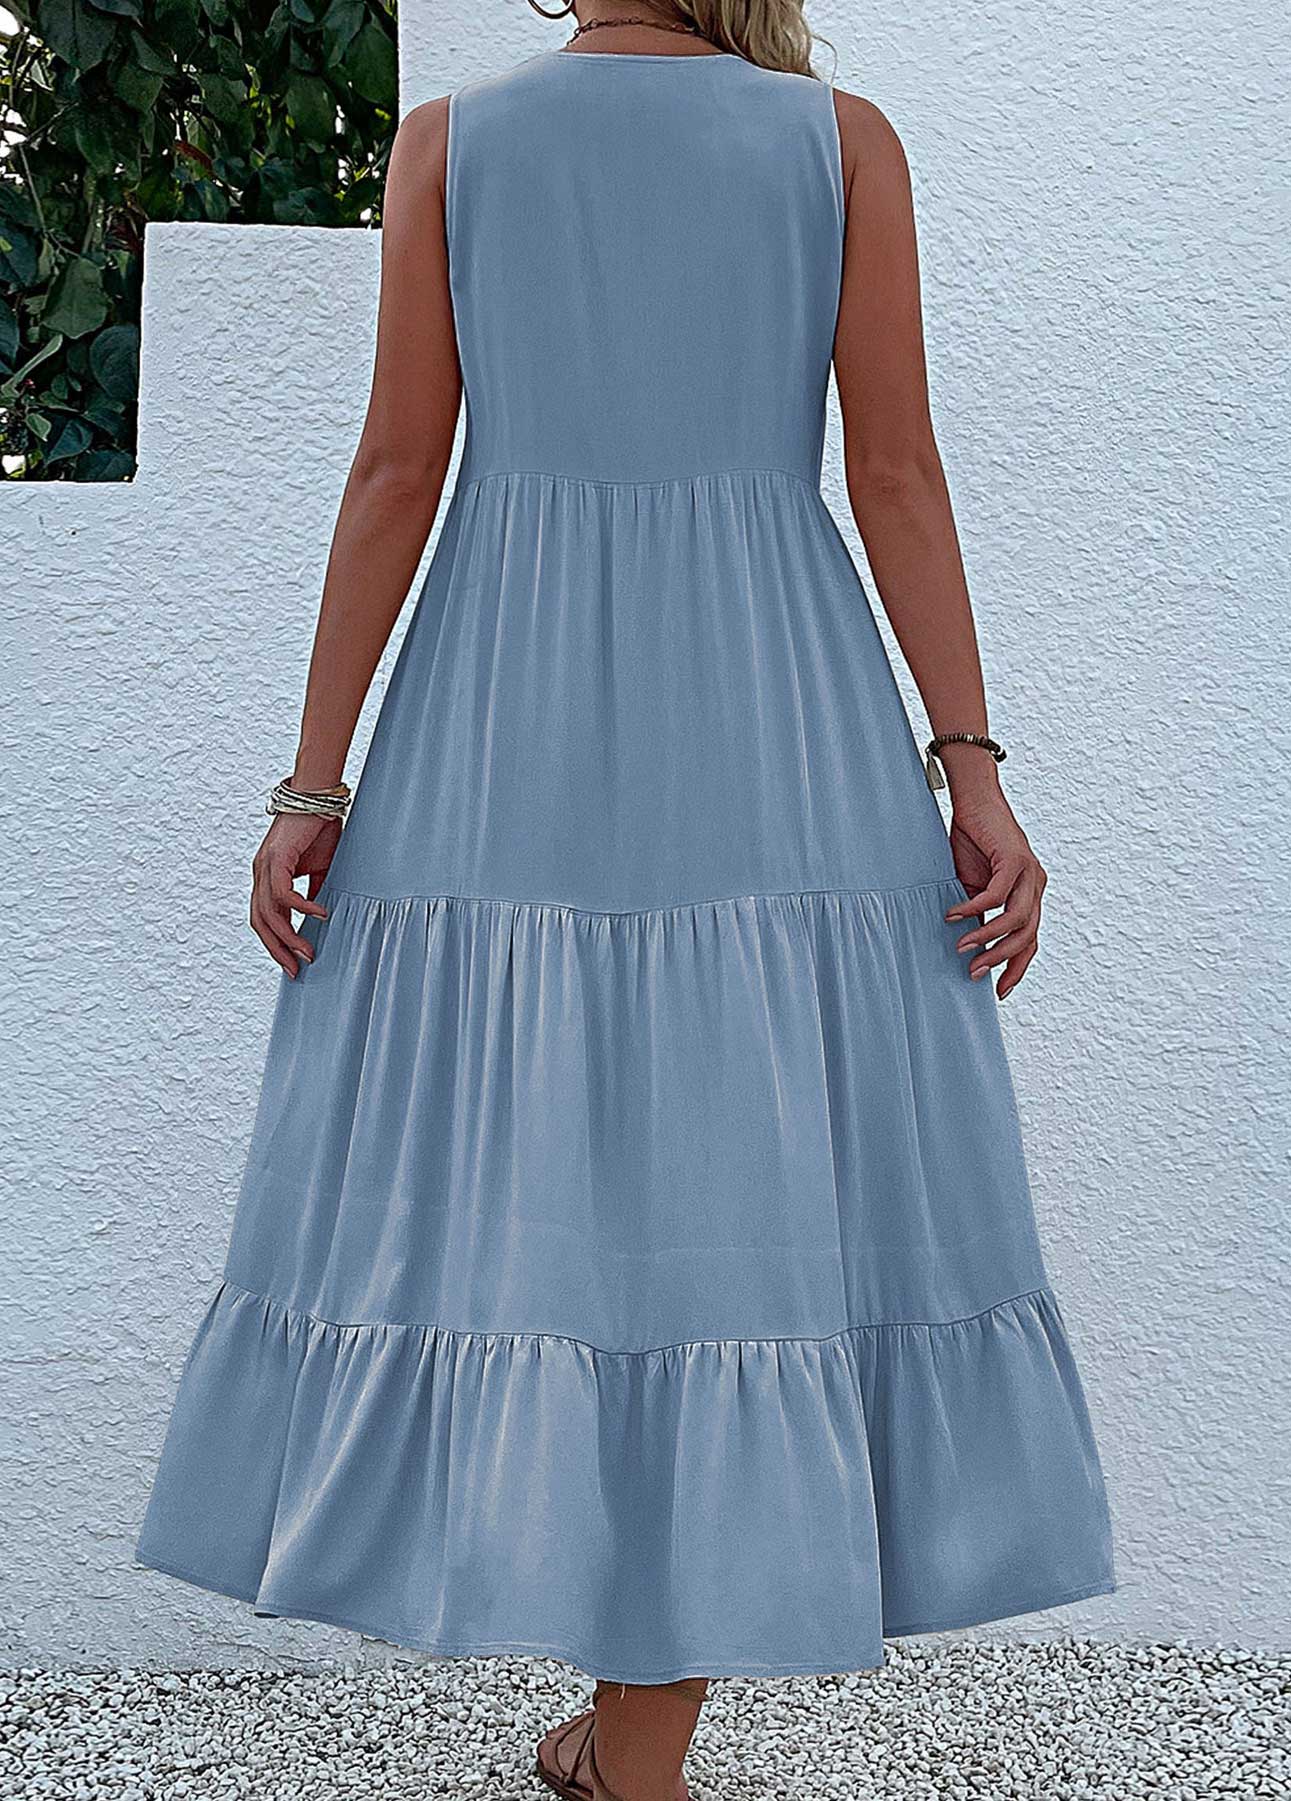 Dusty Blue Button A Line Sleeveless Dress | modlily.com - USD 32.98